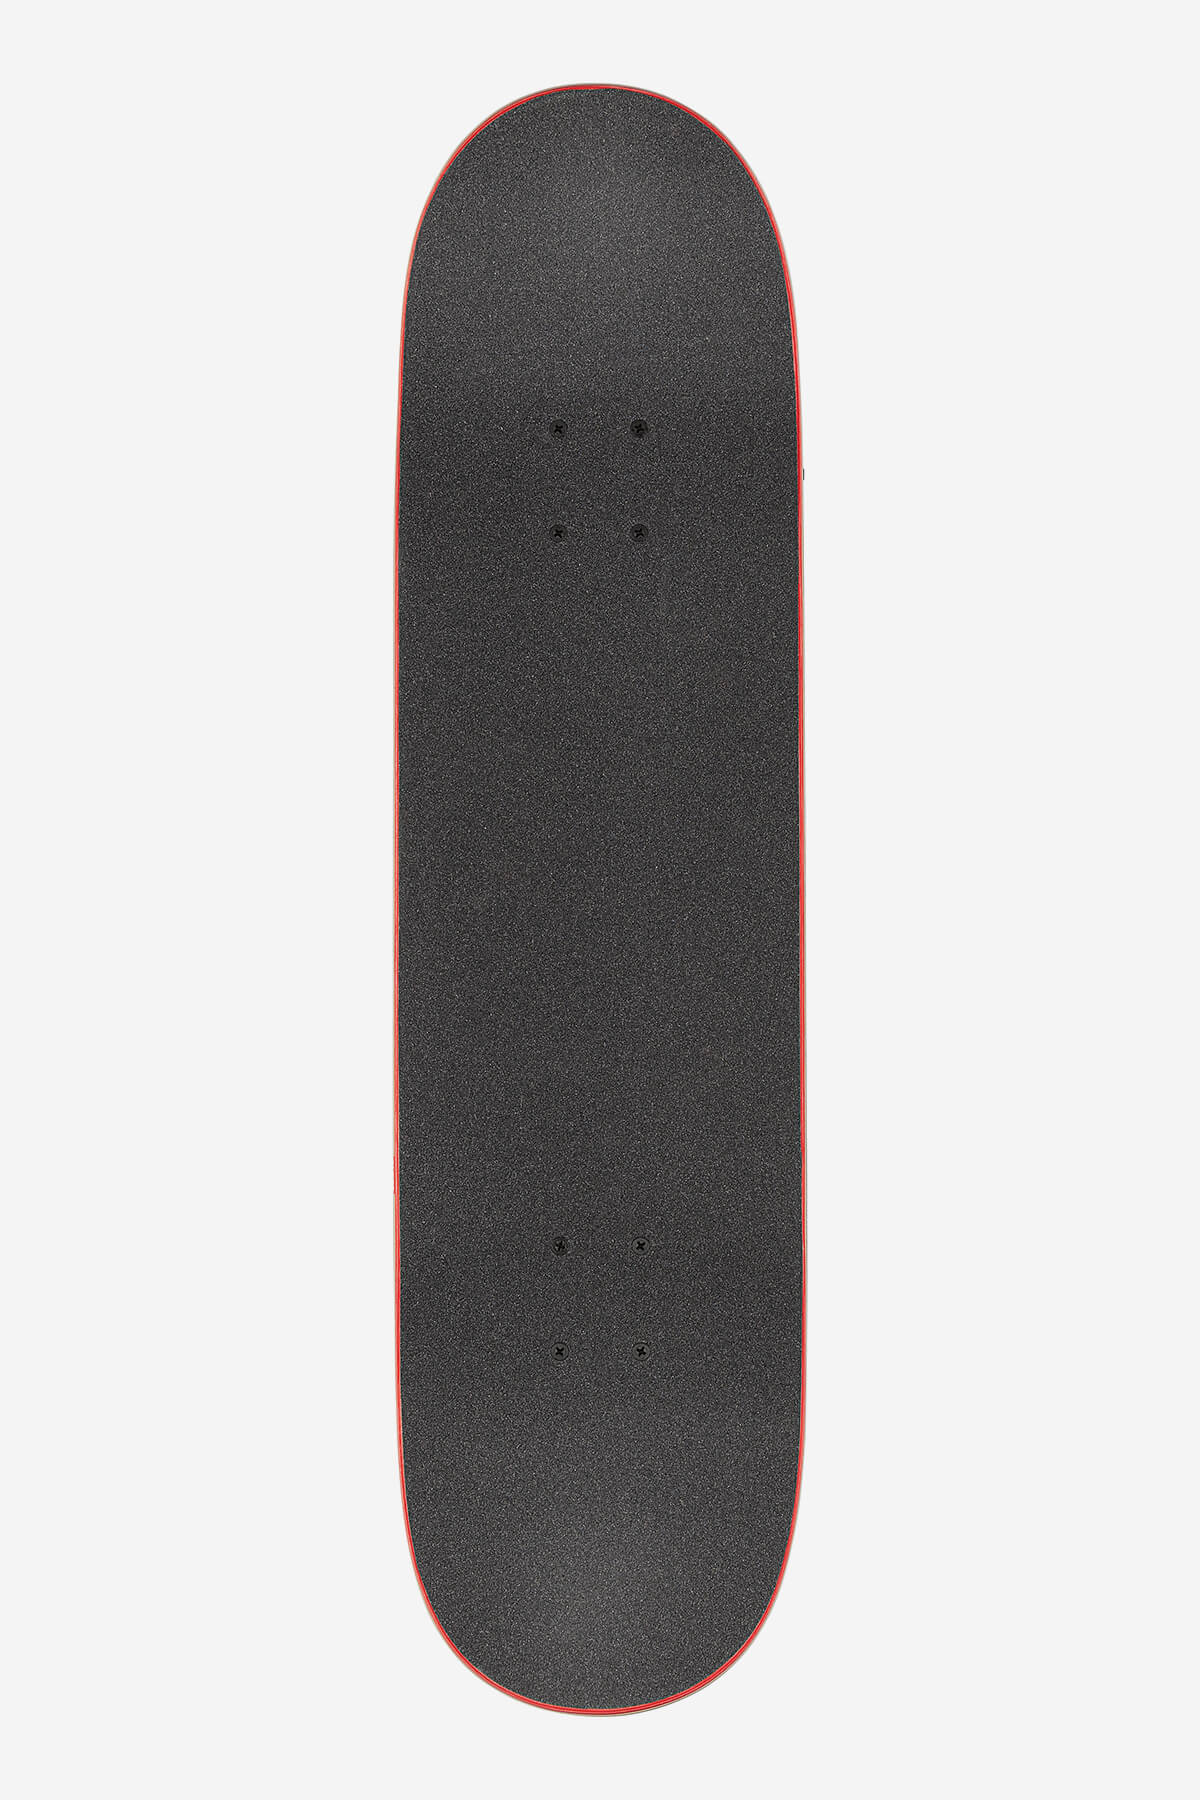 Globe - G1 Stack - Daydream - 8.25" Compleet Skateboard